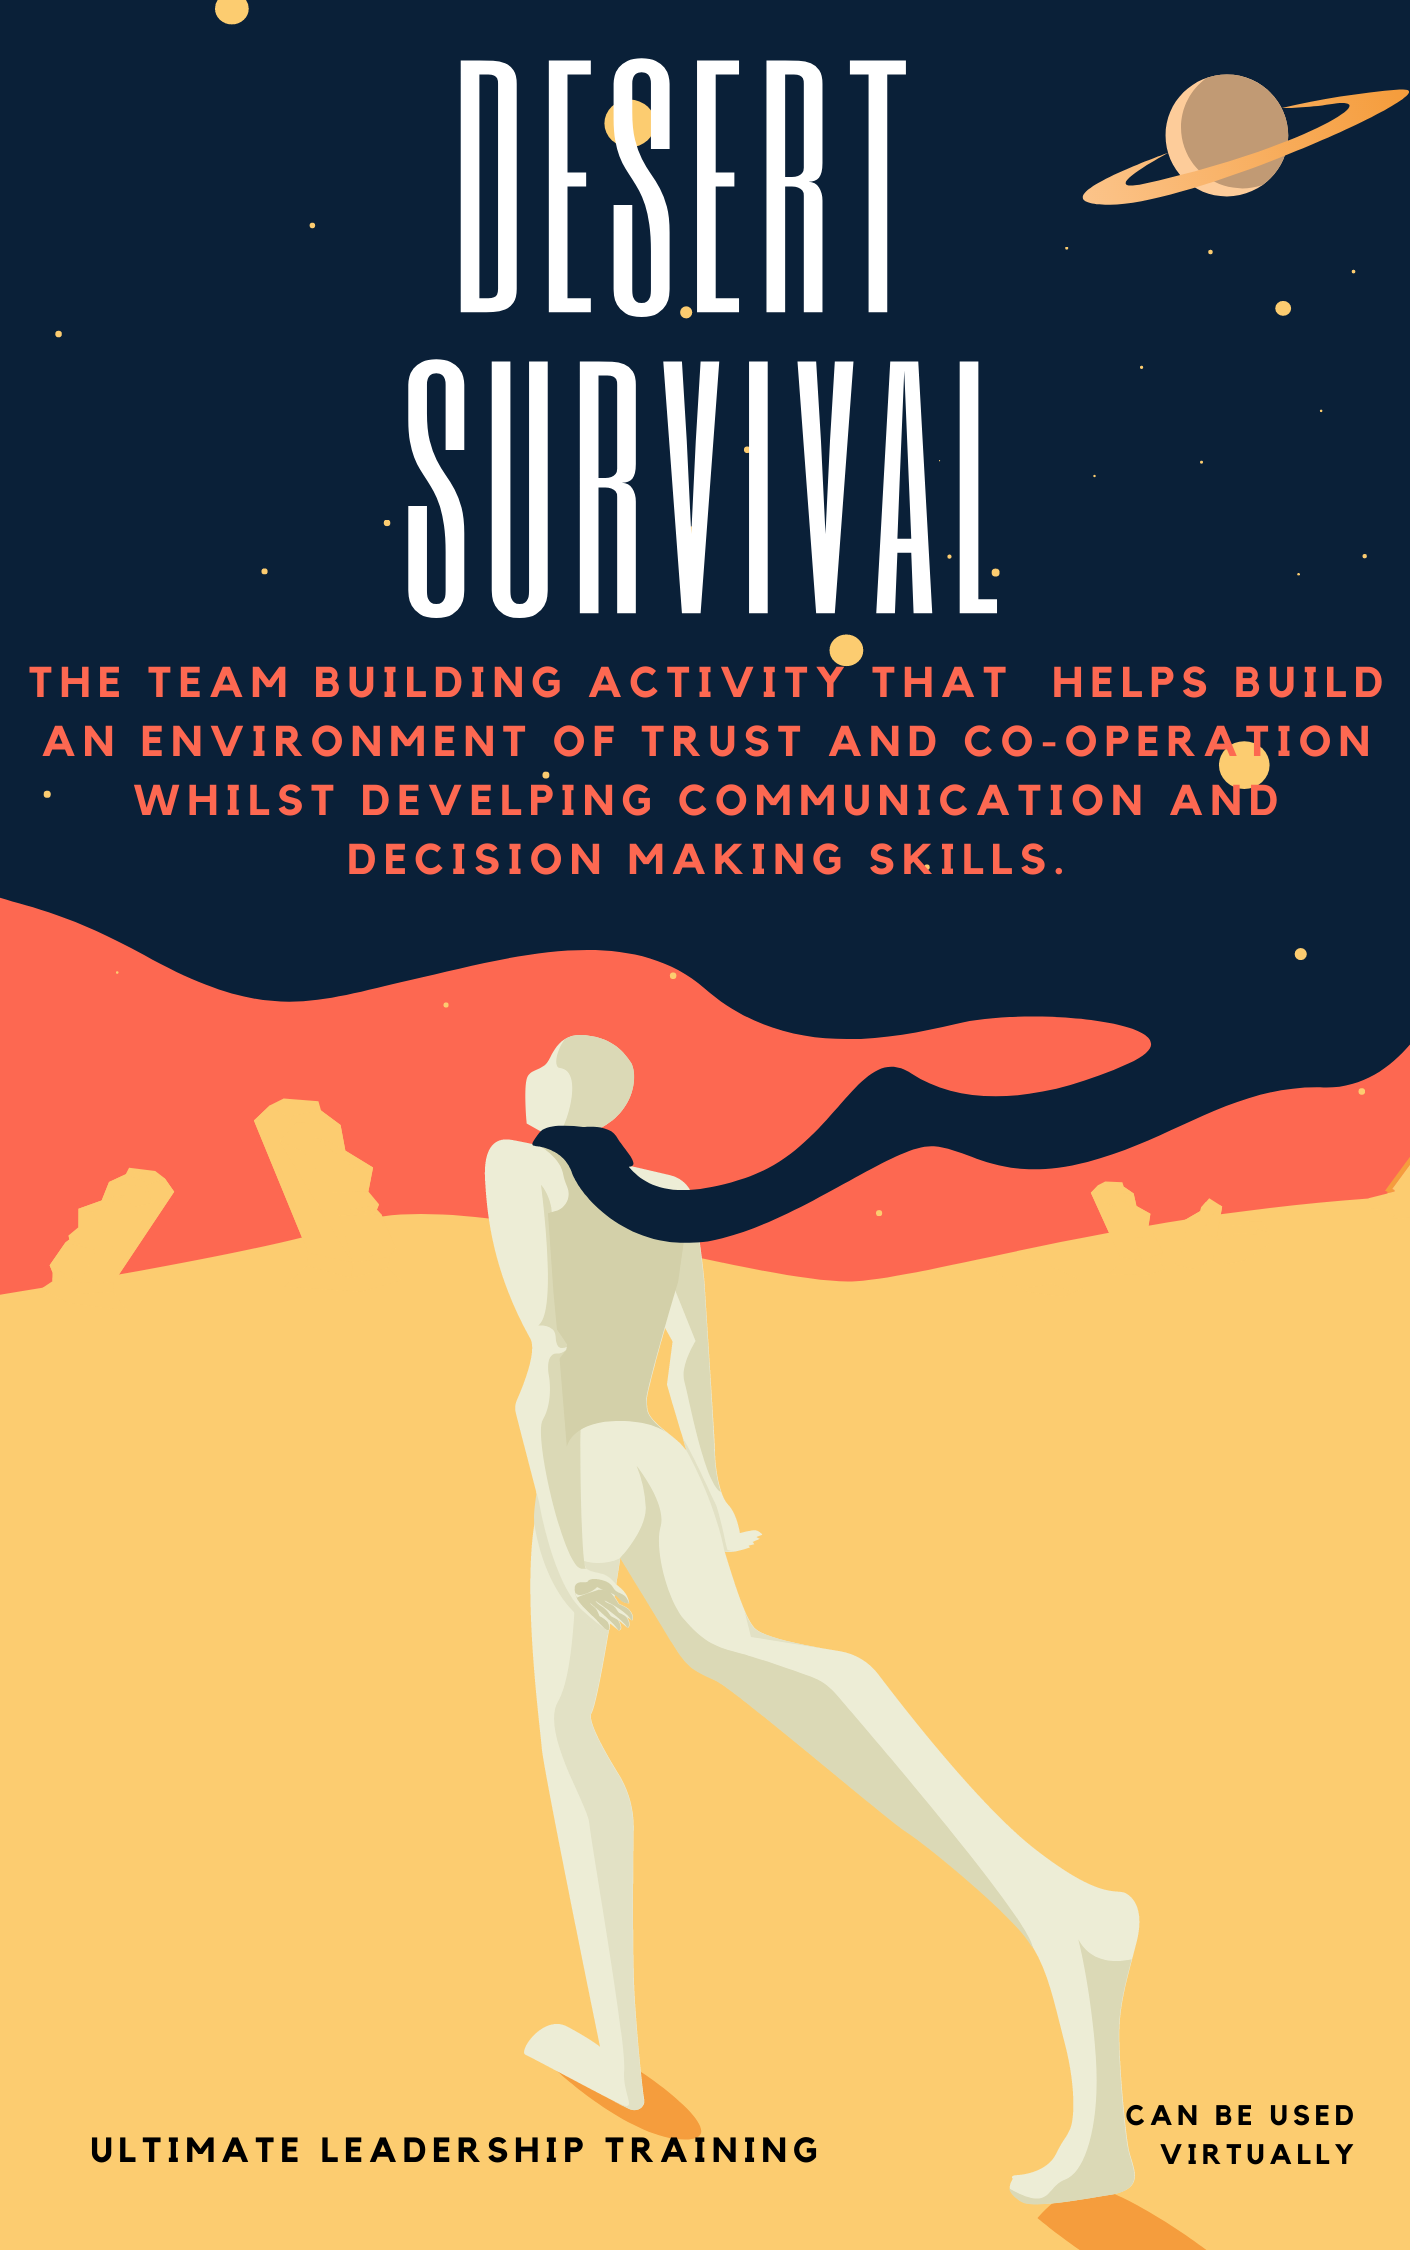 Desert Survival Team Building